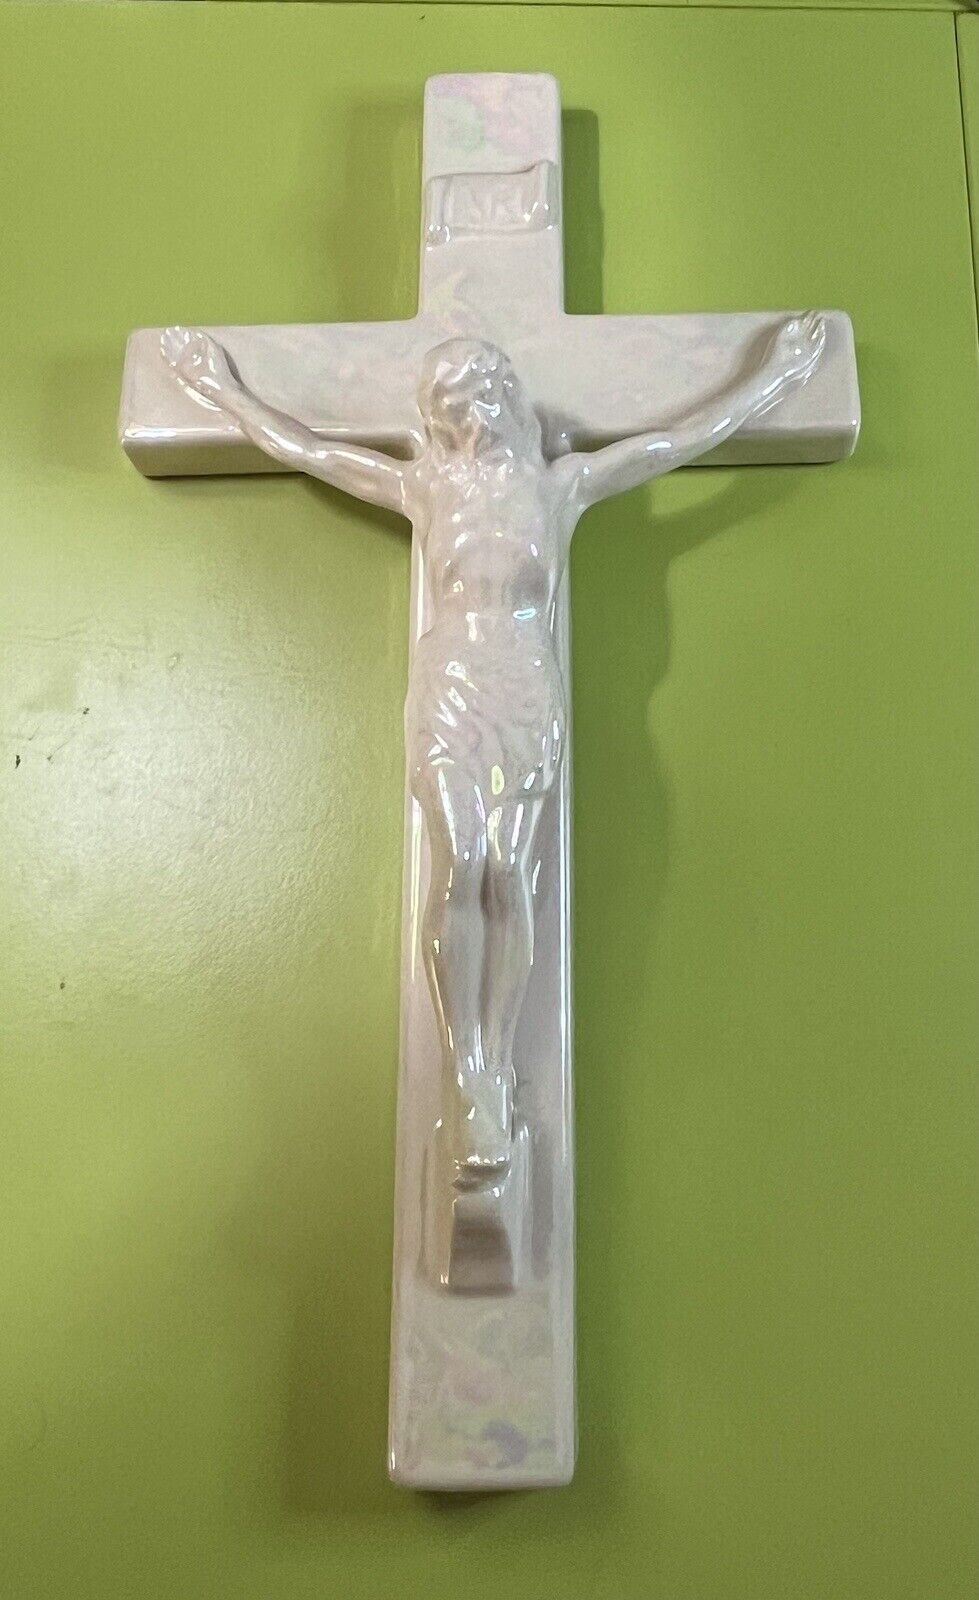 VTG Iridescent Pearl Color Ceramic Porcelain Christ/Jesus on The Cross Wall Art